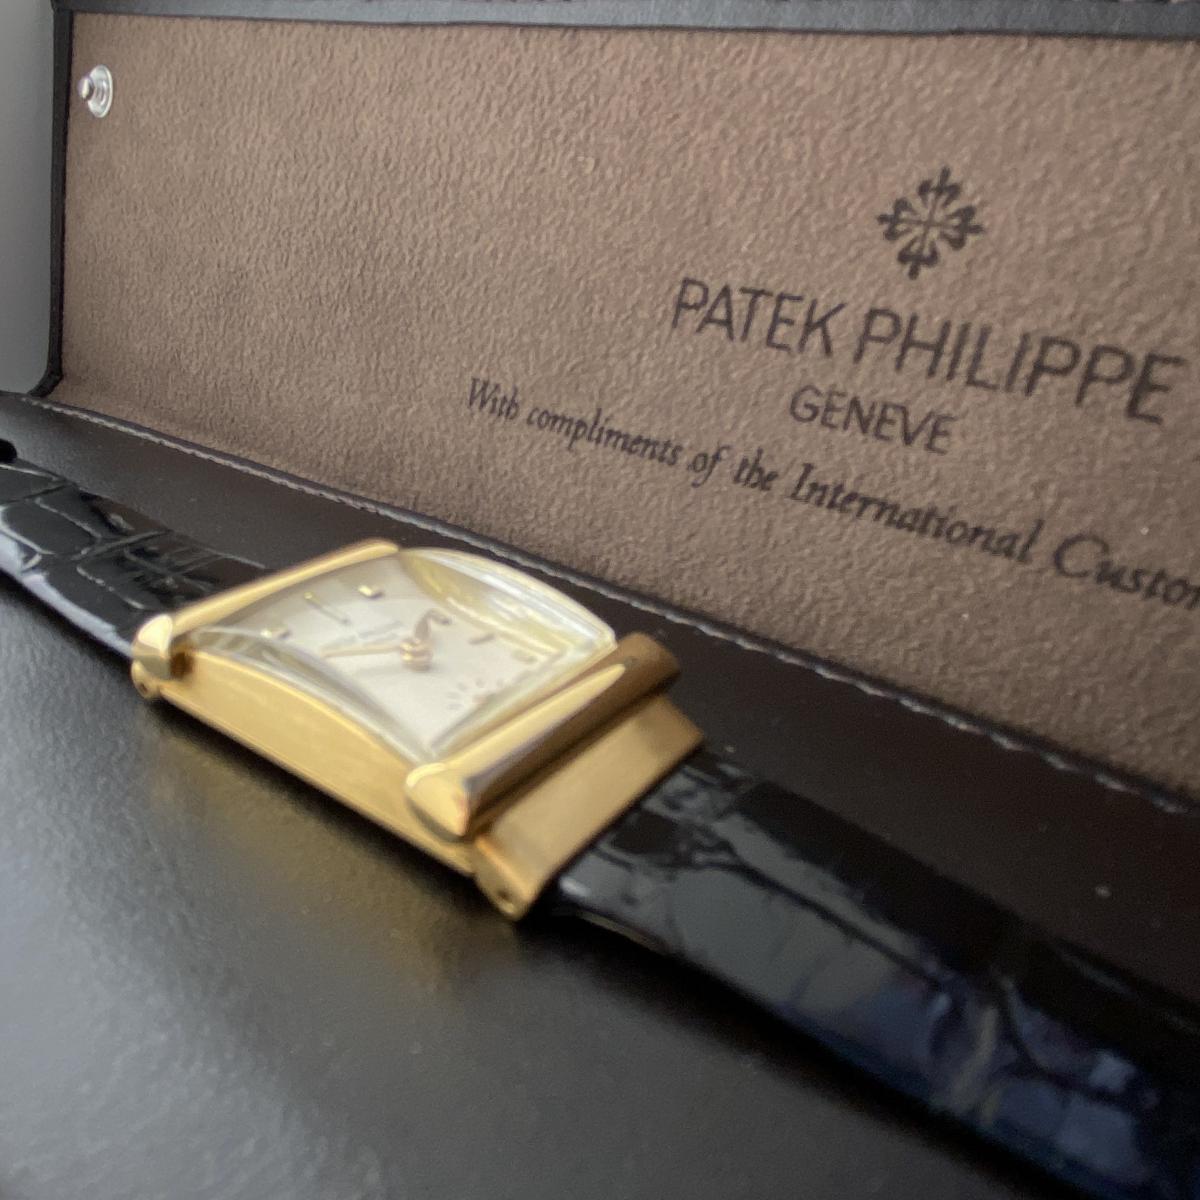 Patek Philippe dress watch